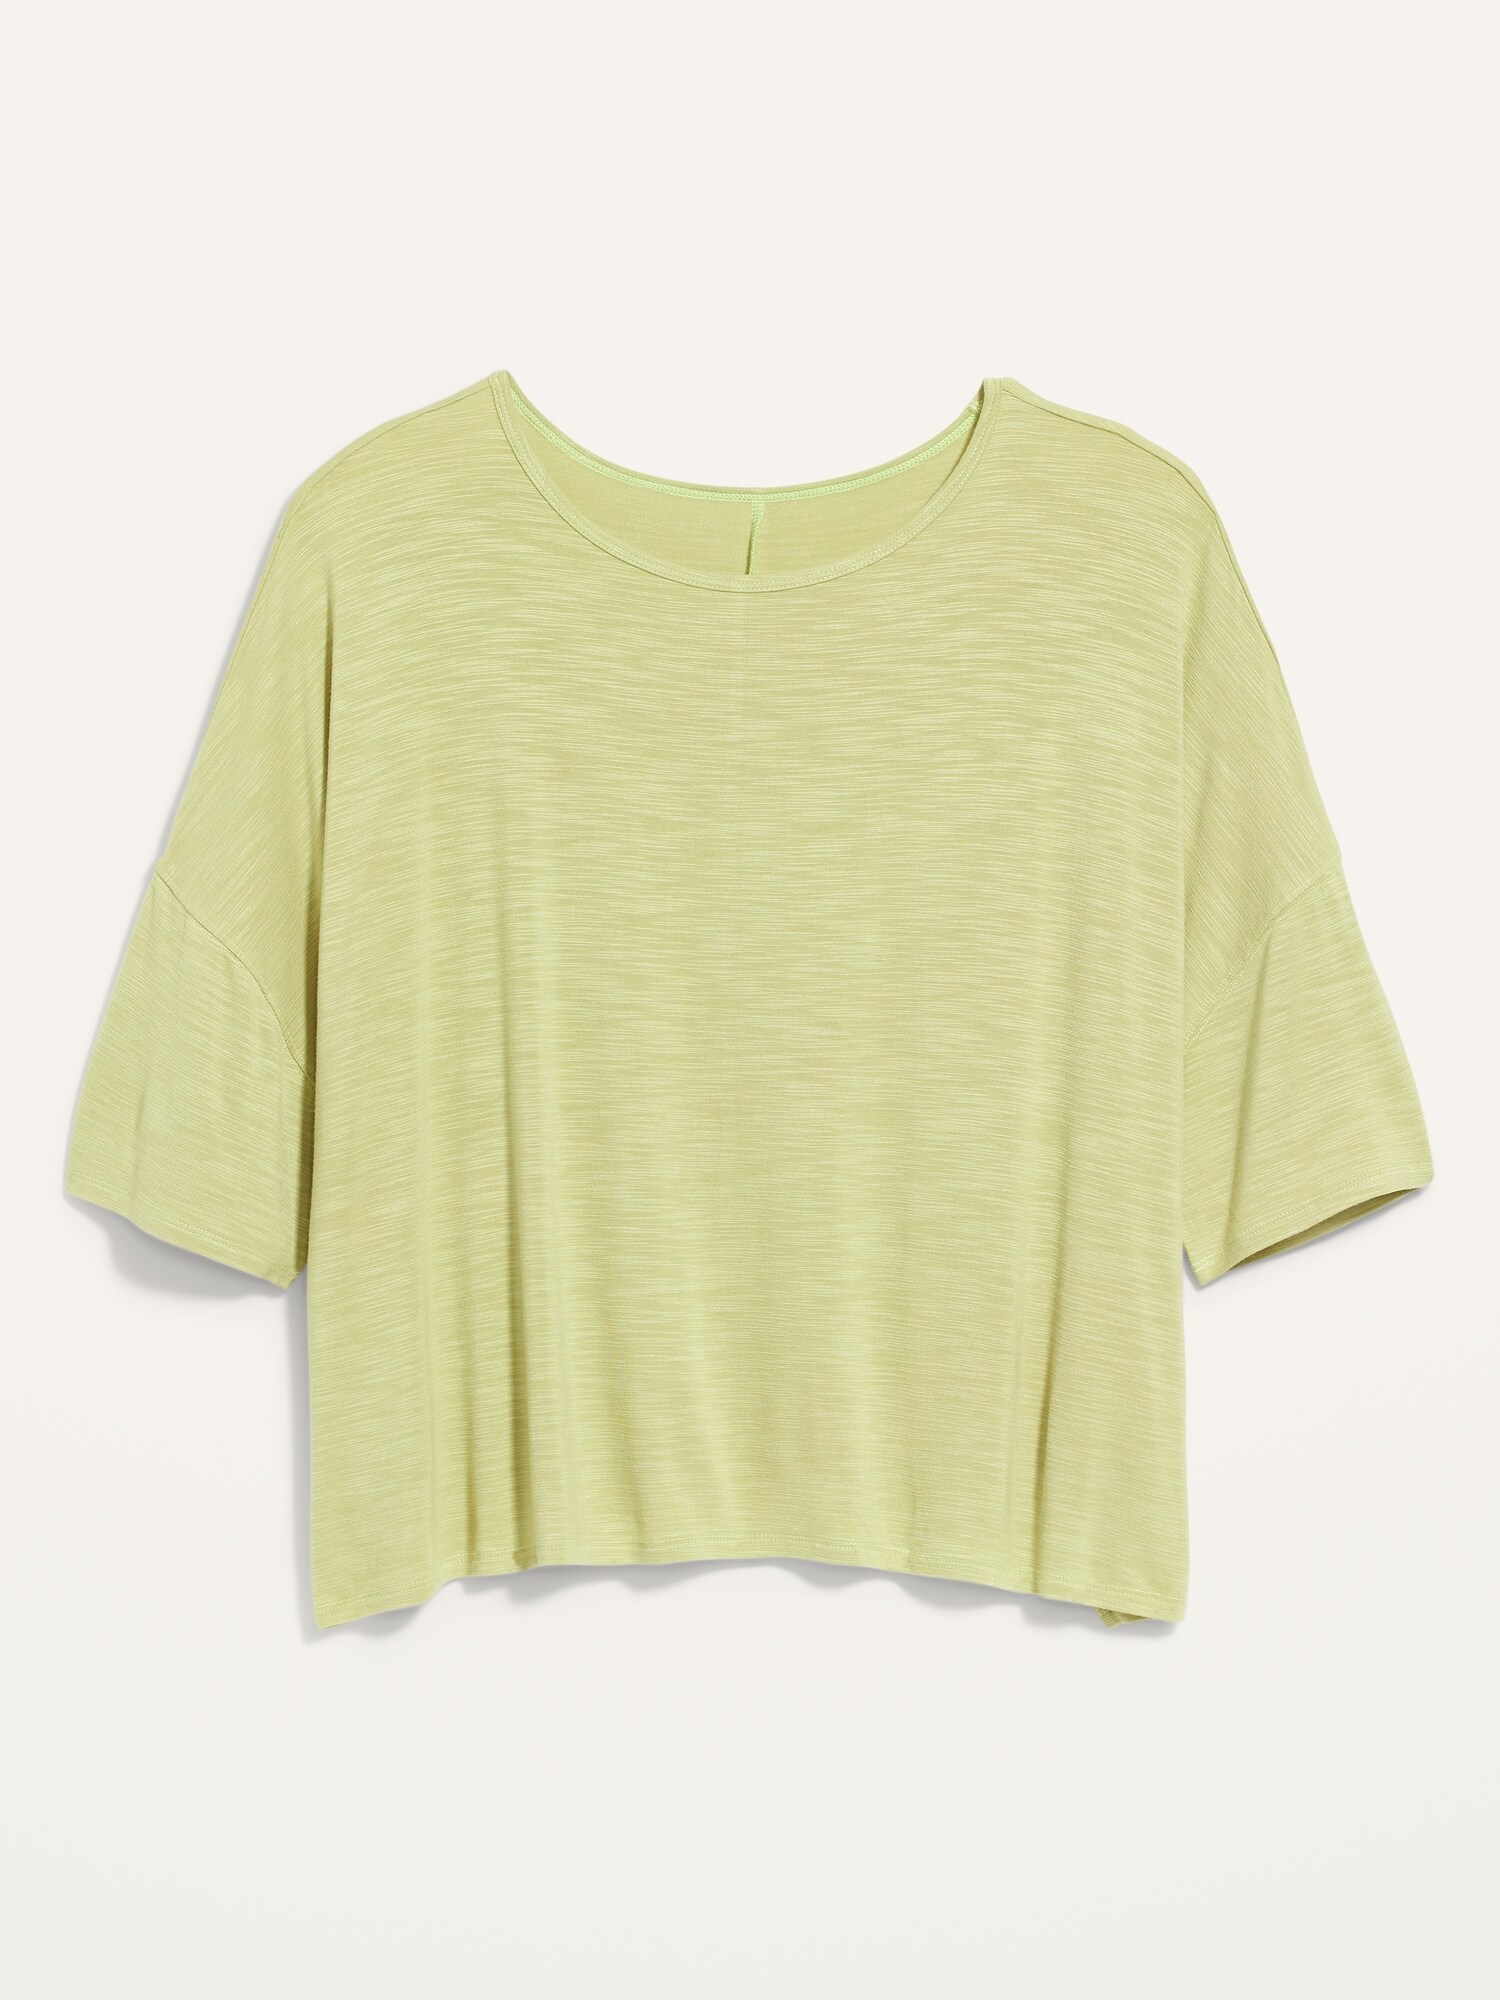 Luxe Oversized Short-Sleeve Slub-Knit T-Shirt for Women